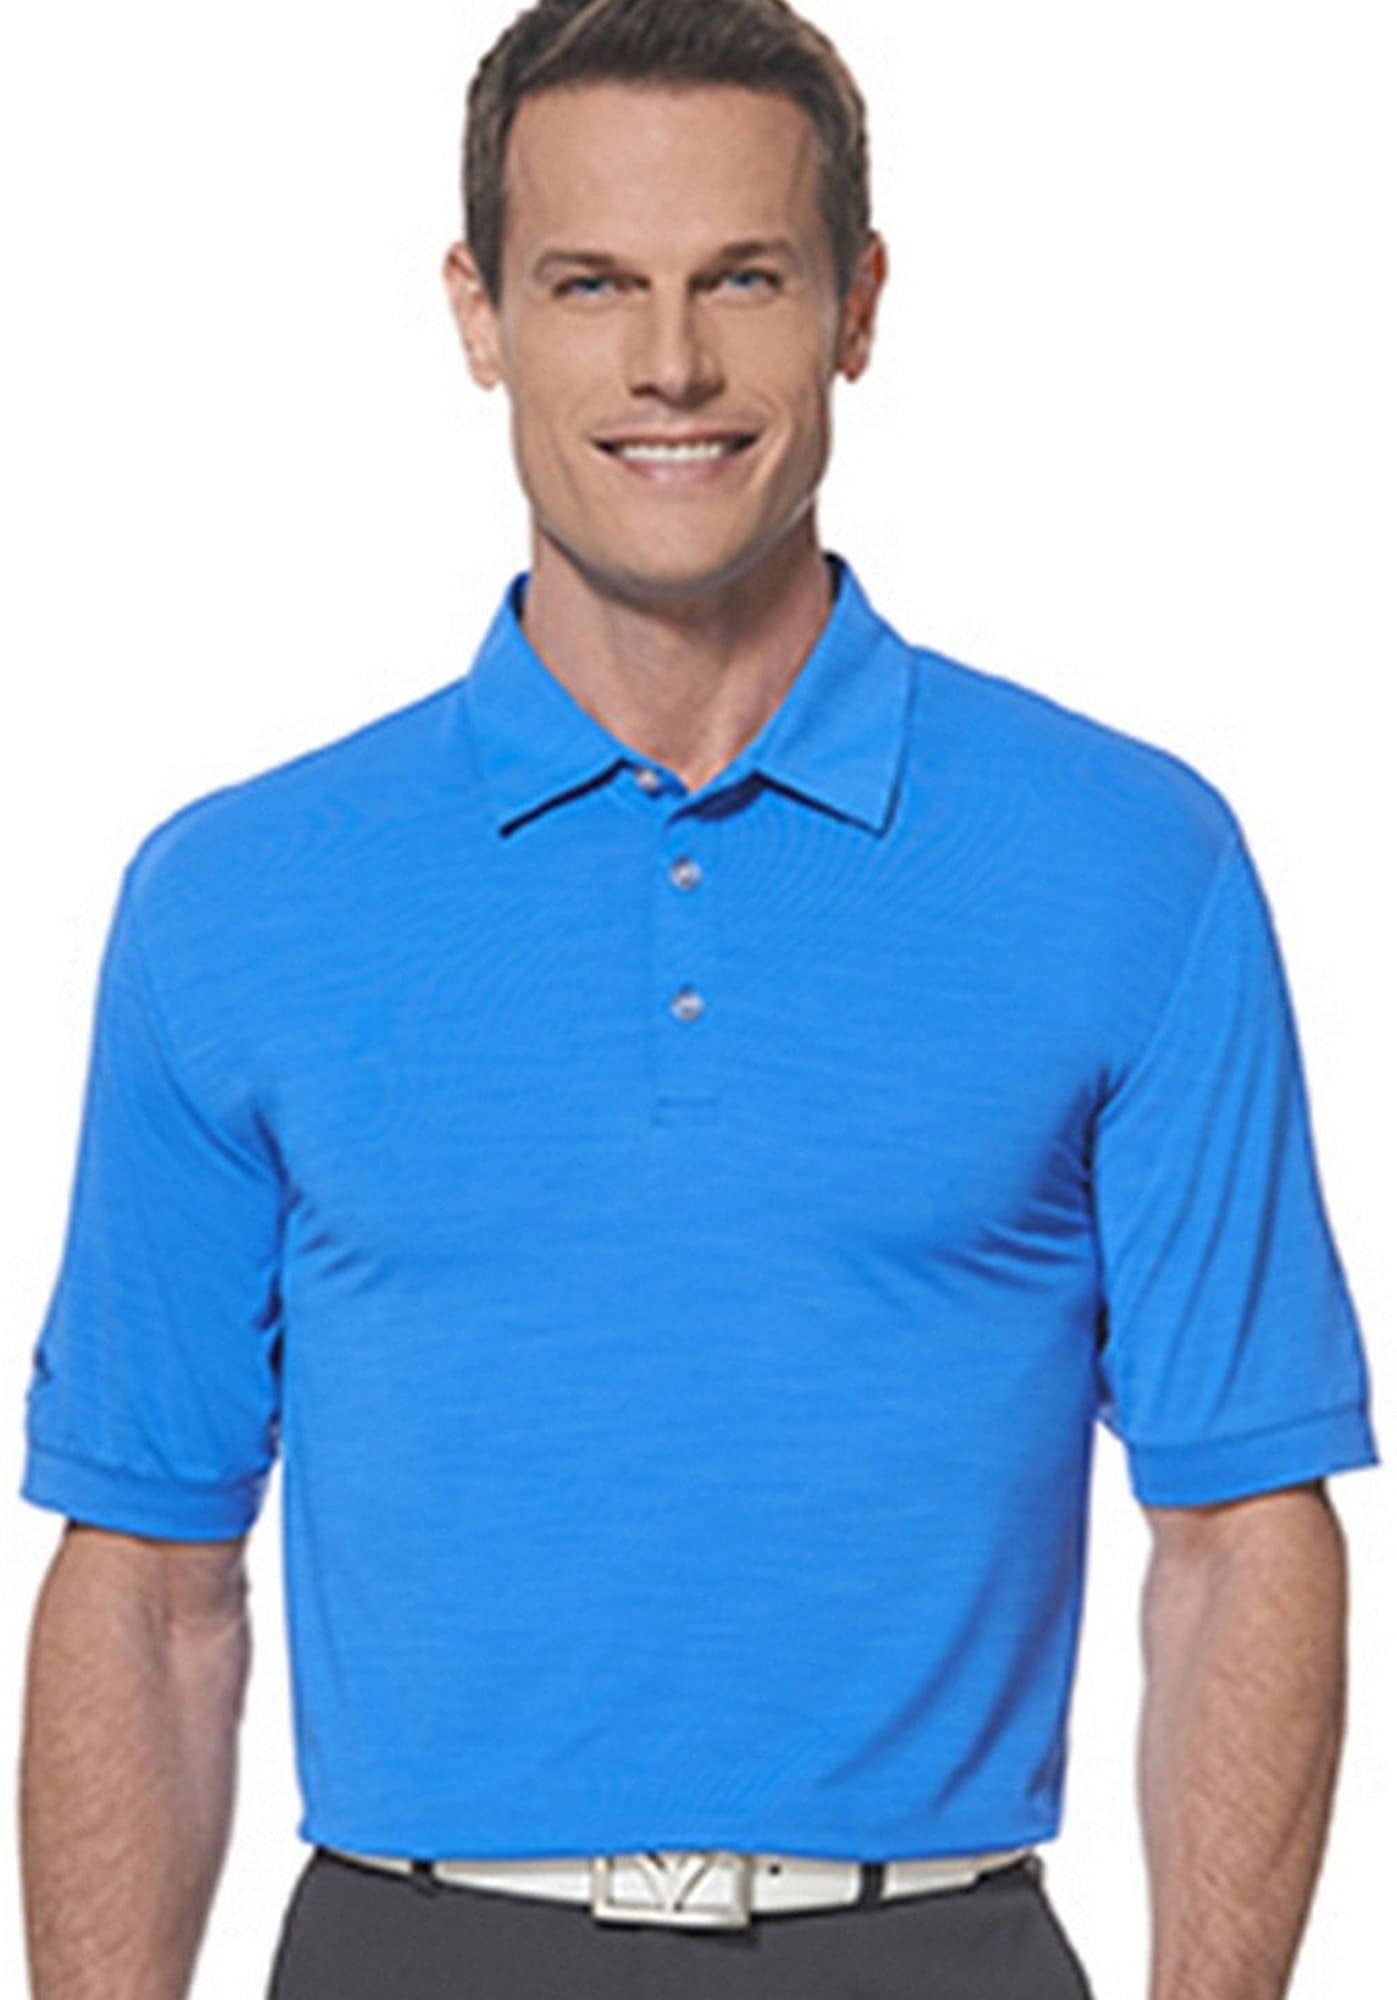 matching men's and women's golf shirts